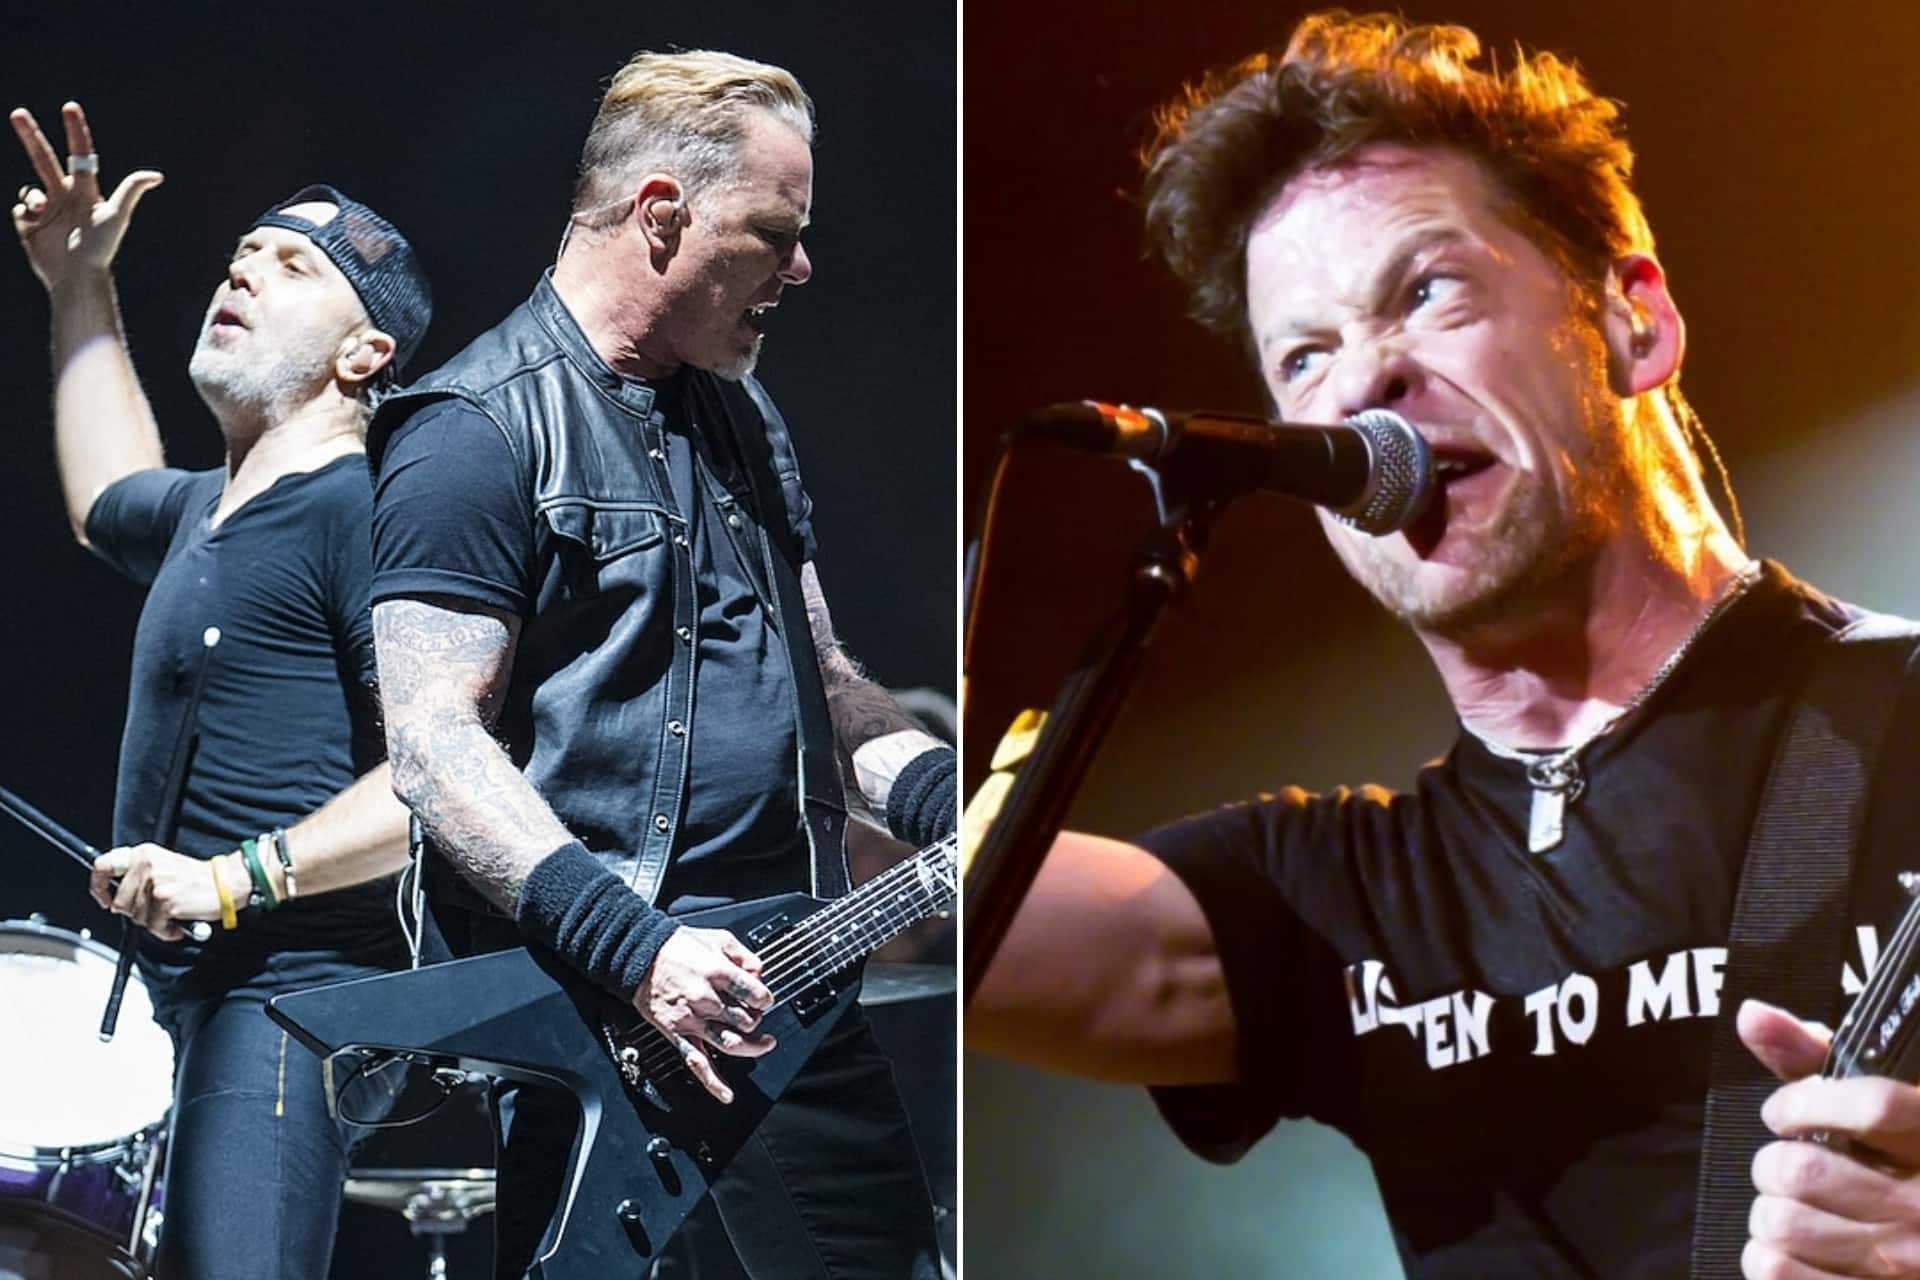 Jason Newsted Calls James Hetfield and Lars Ulrich 'The Original Garage Rock Duo'